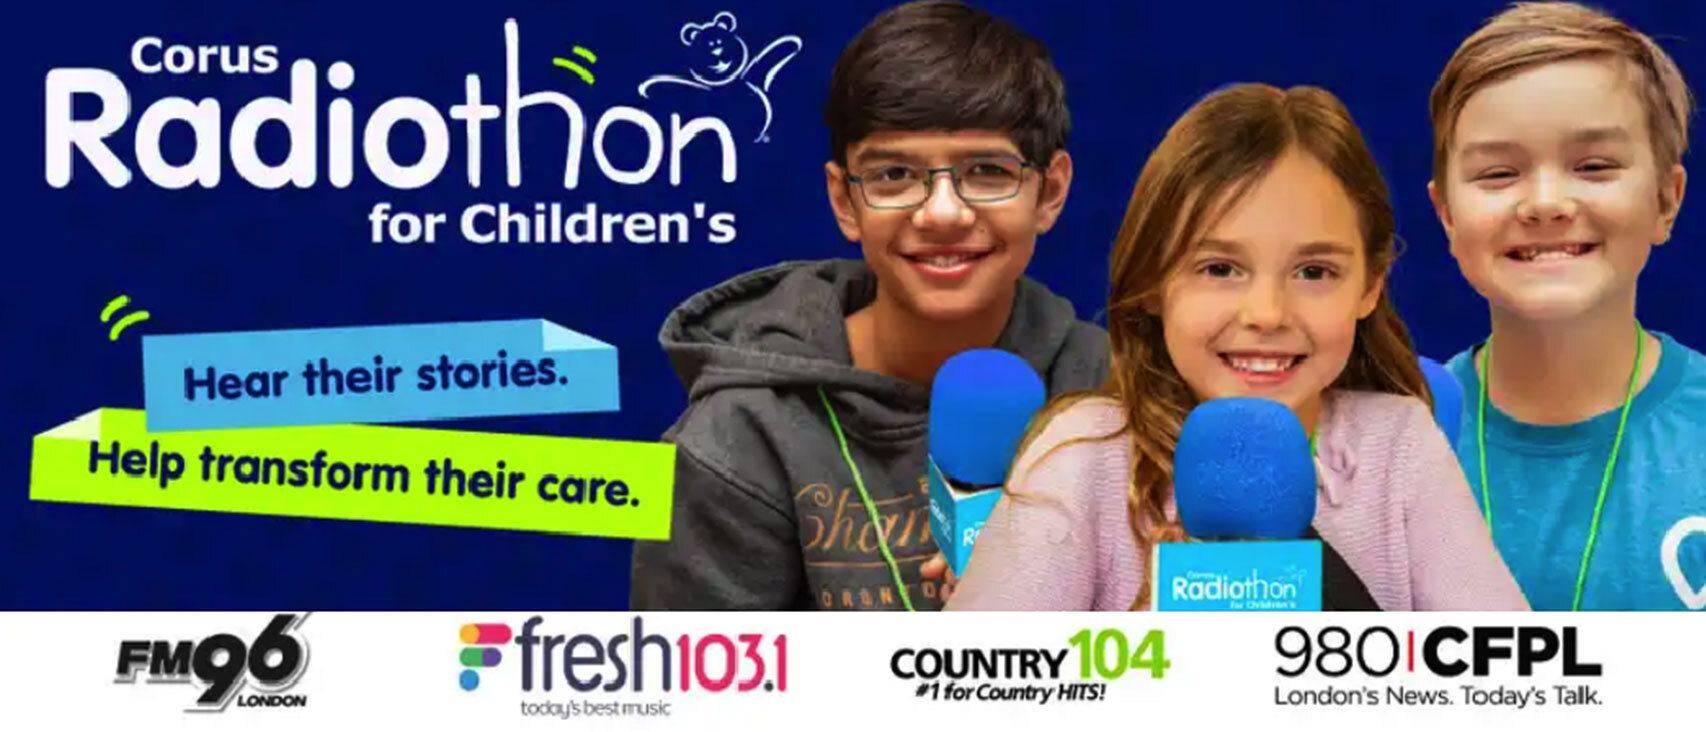 Corus Radiothon for Children’s Health Foundation